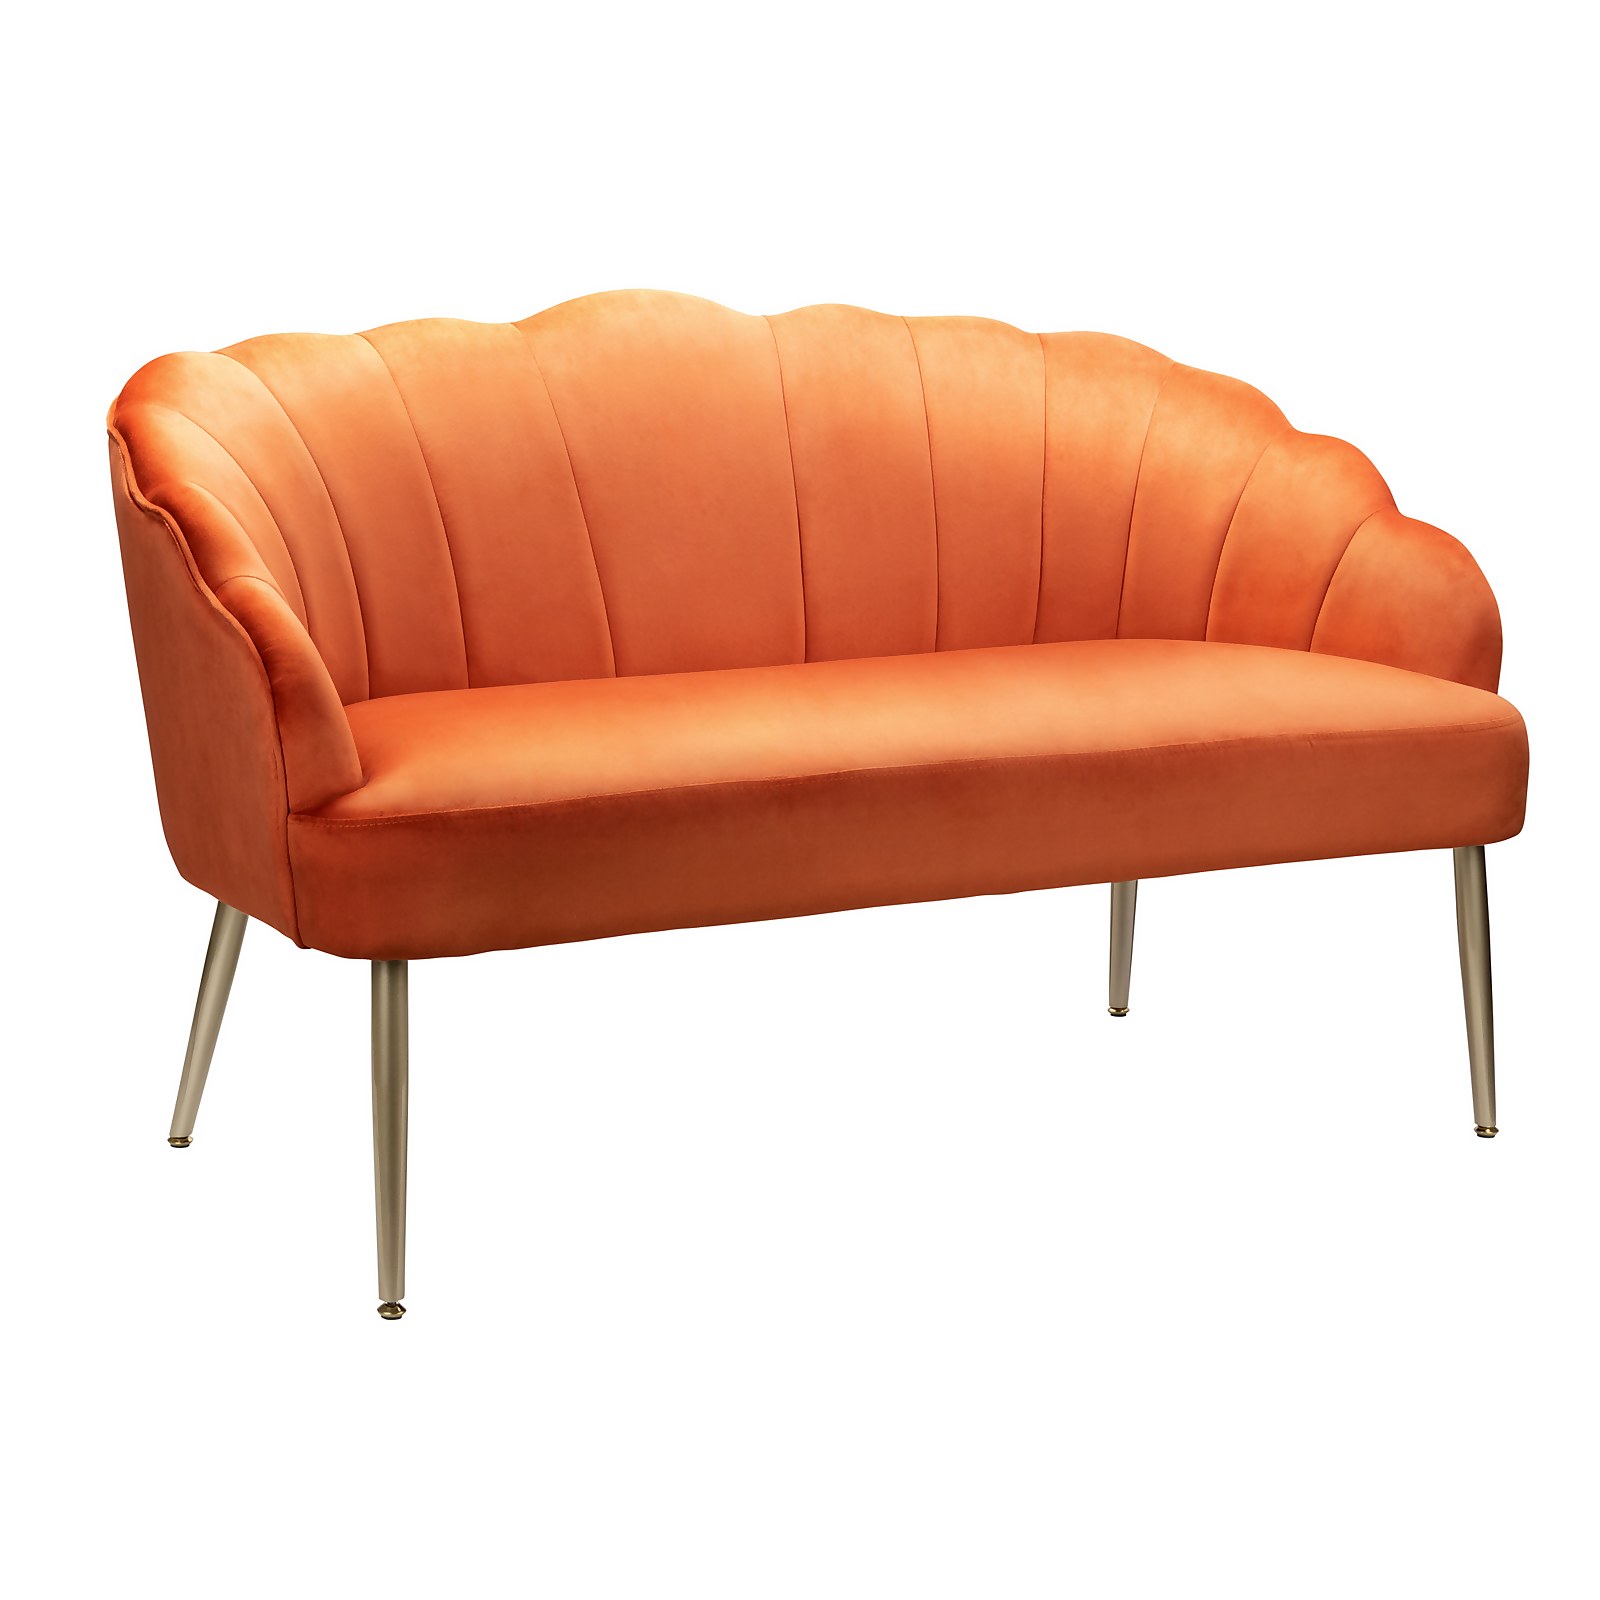 Sophia Scallop Occasional Sofa - Burnt Orange